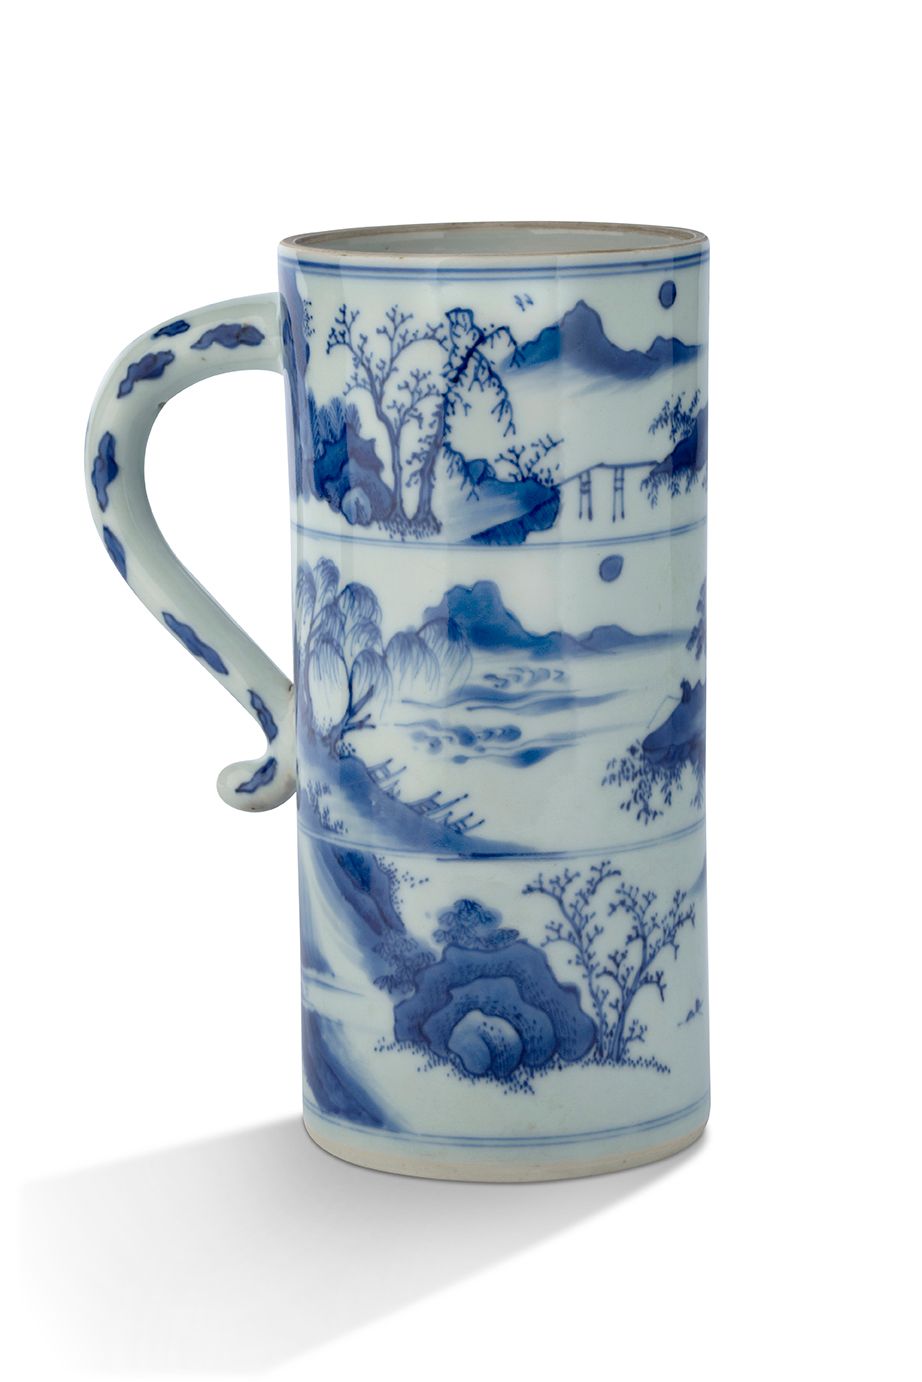 CHINE DYNASTIE MING, PÉRIODE CHONGZHEN, VERS 1640 Mug
In blue-white porcelain, d&hellip;